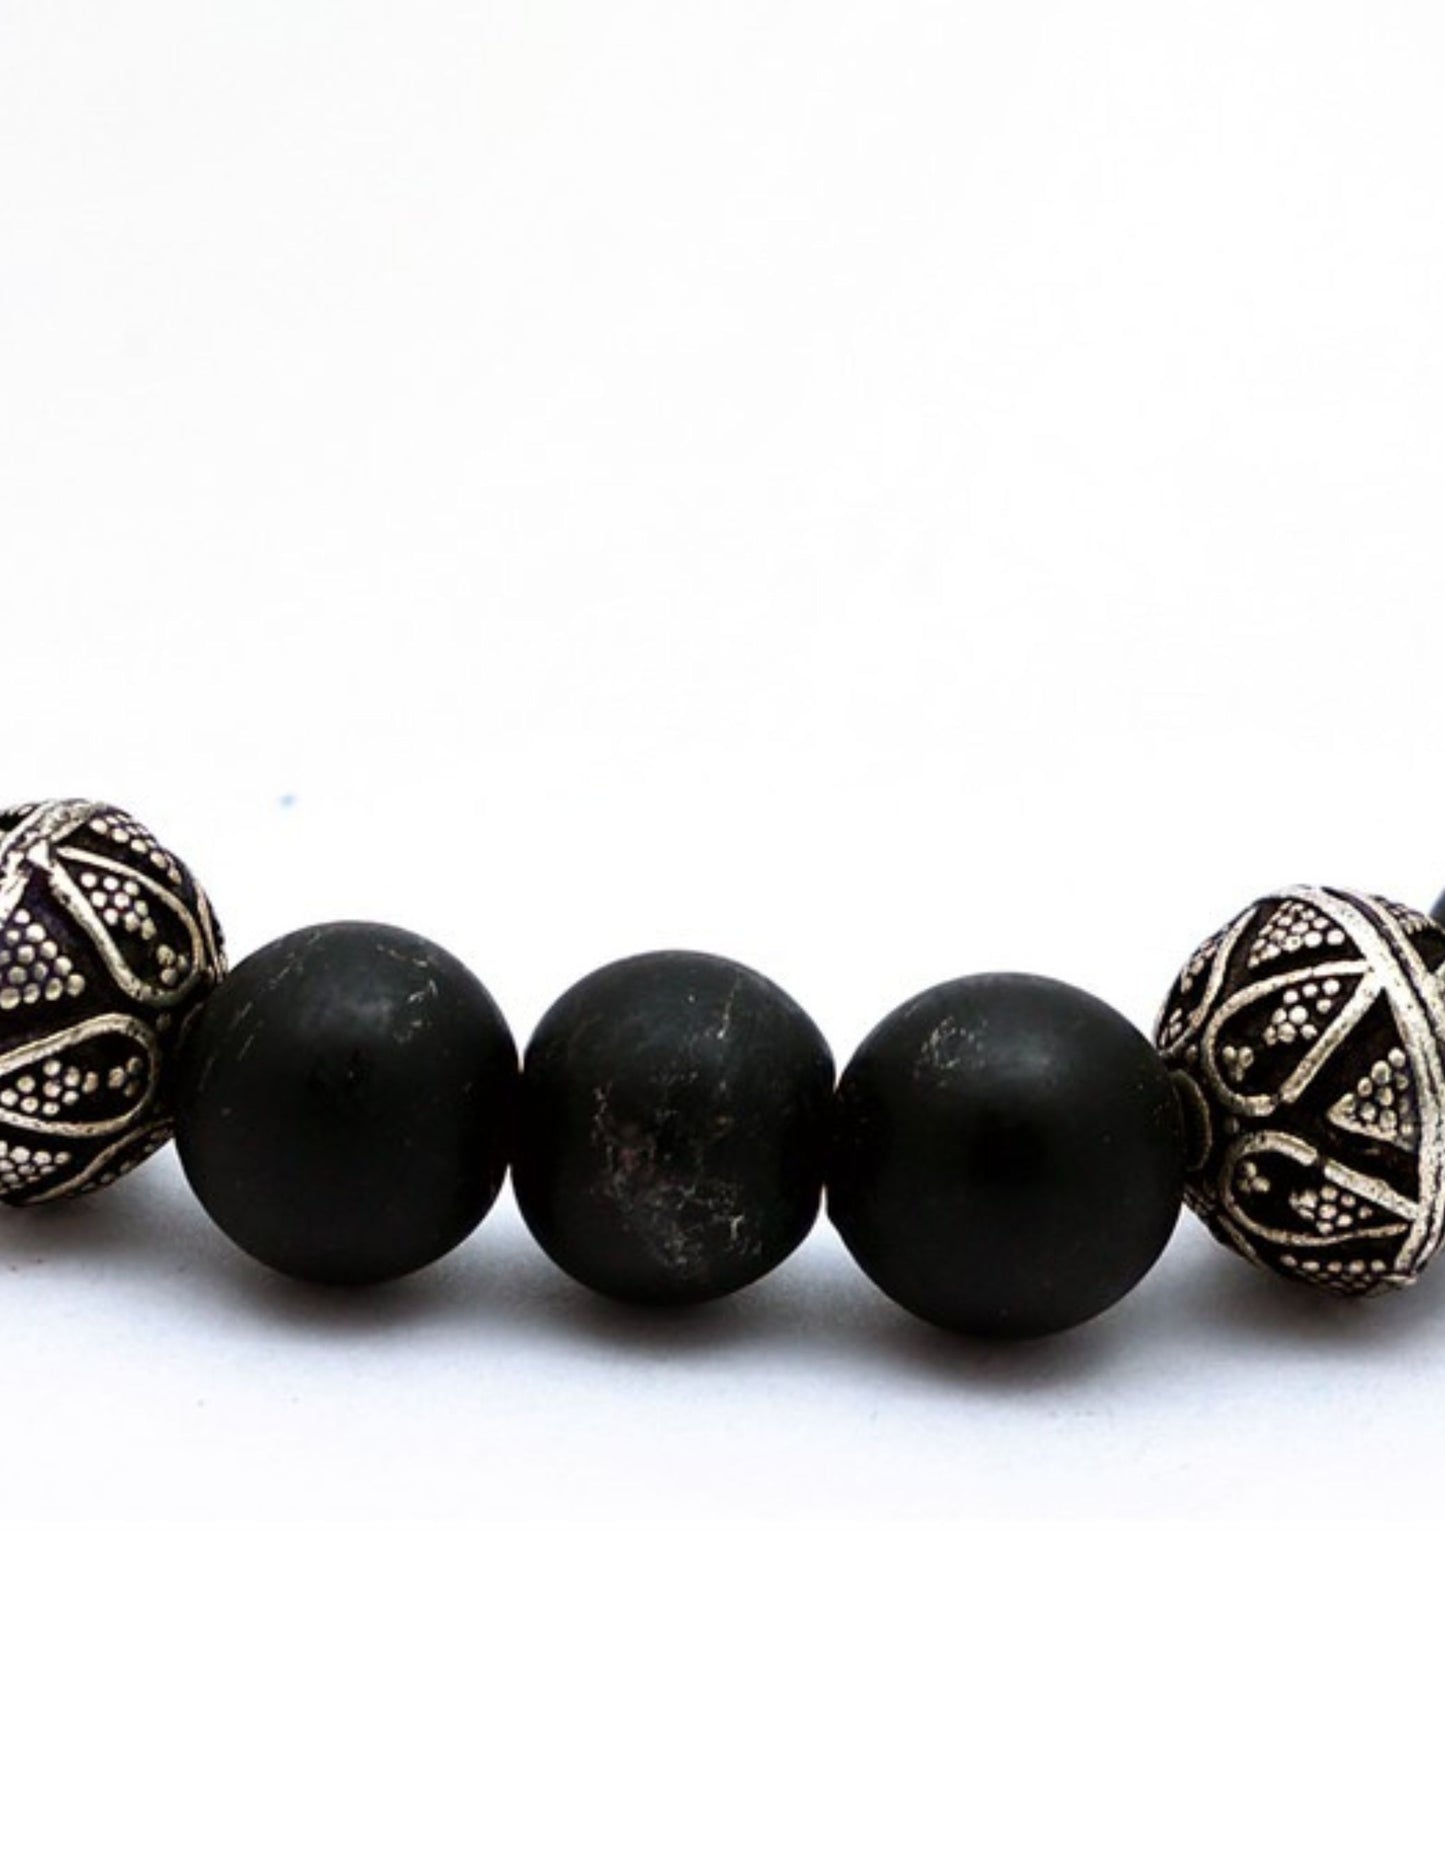 Black Beads necklace